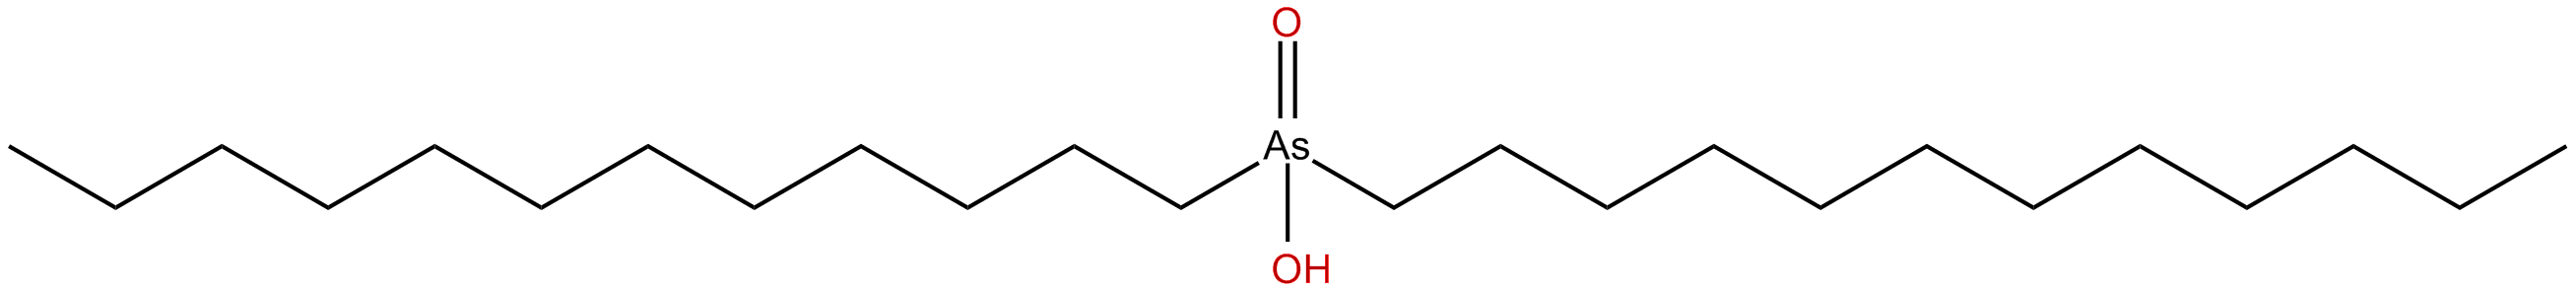 Image of didodecylhydroxy arsine oxide